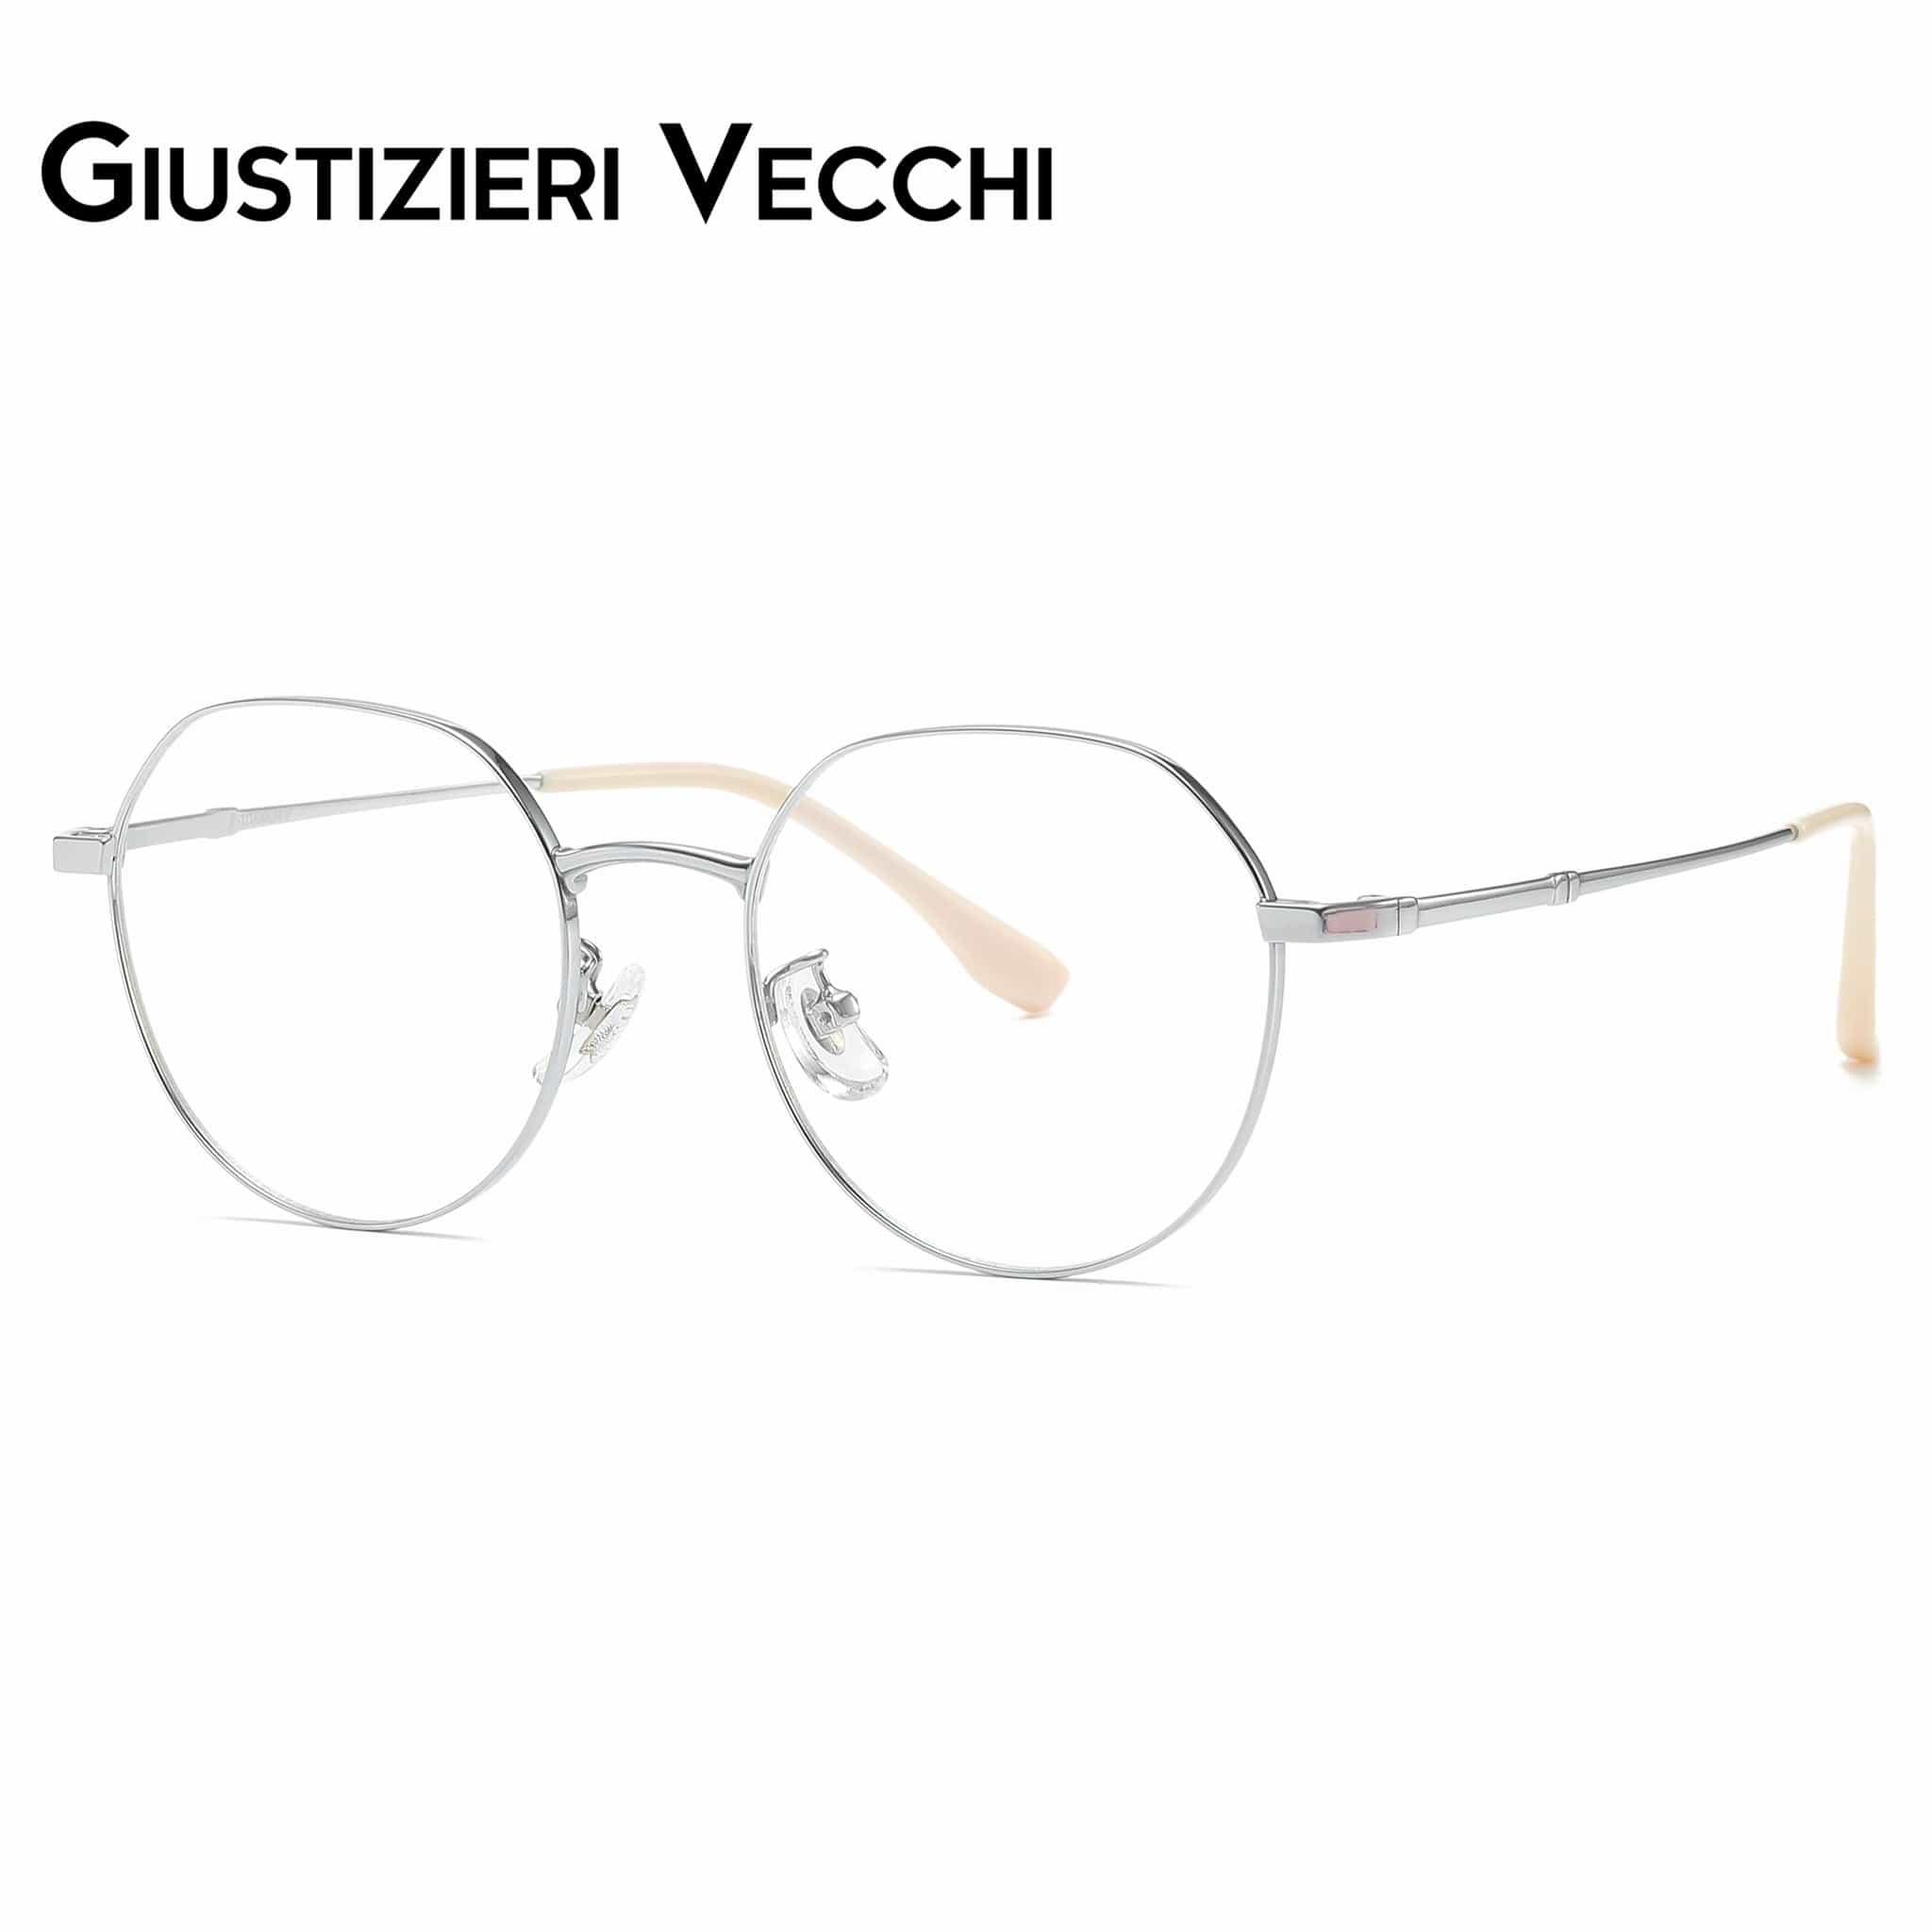 GIUSTIZIERI VECCHI Eyeglasses CoolSonic Duo